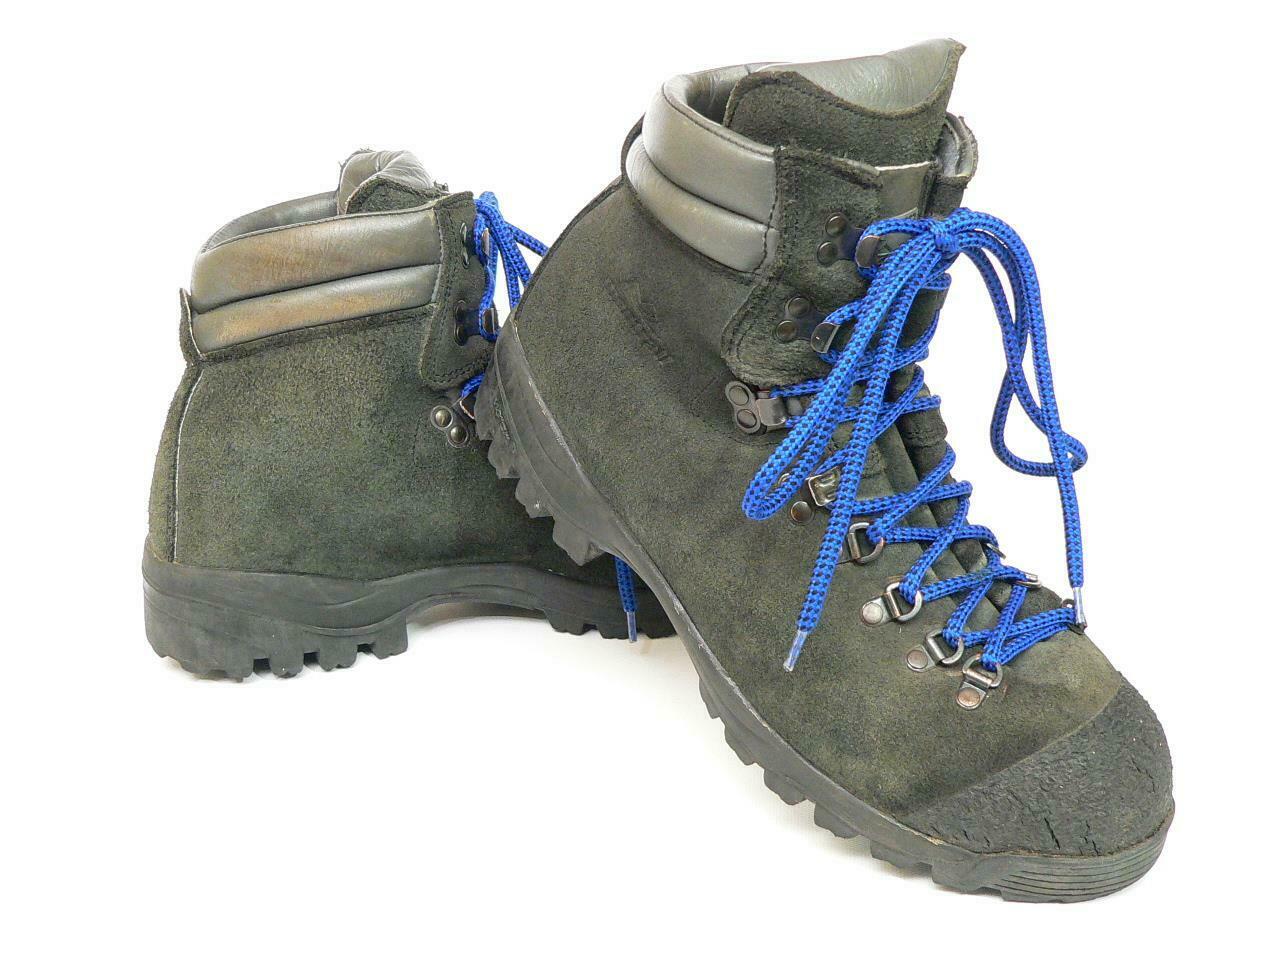 Italian Montrail Hiking Trekking Mountaineering Expedition Boots Men's US 11